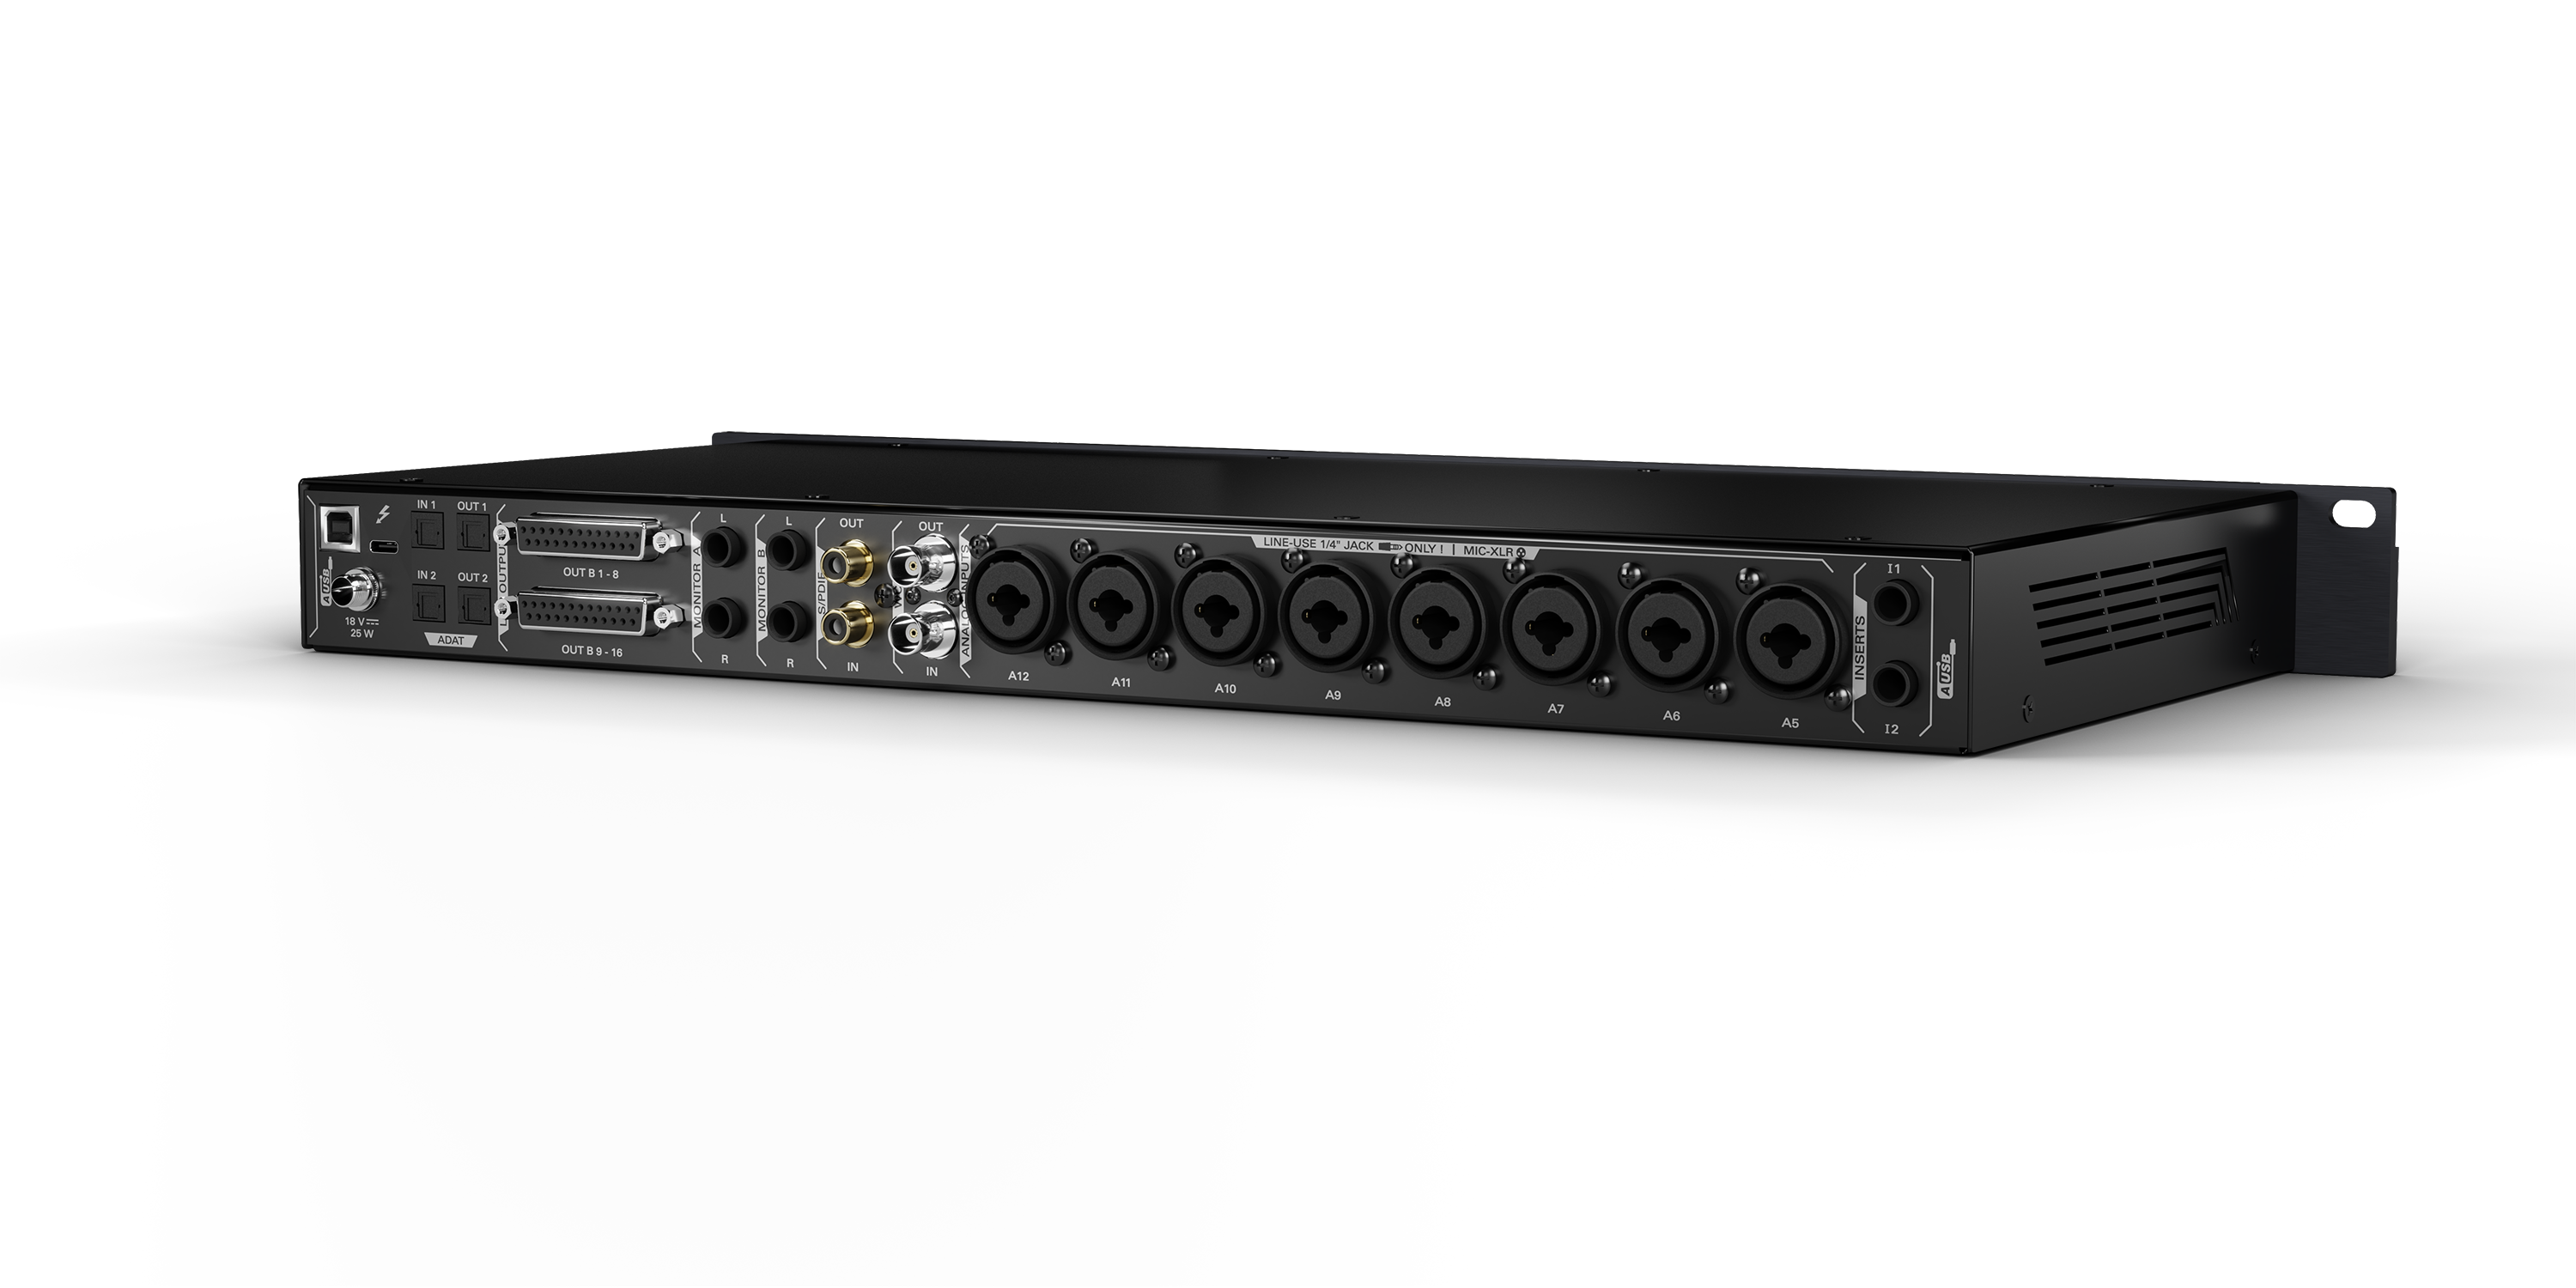 Antelope Audio Orion Studio Synergy Core | 16x26 Professional TB 2 & USB 2 ADAT/SPDIF & FPGA - Professional Audio Design, Inc